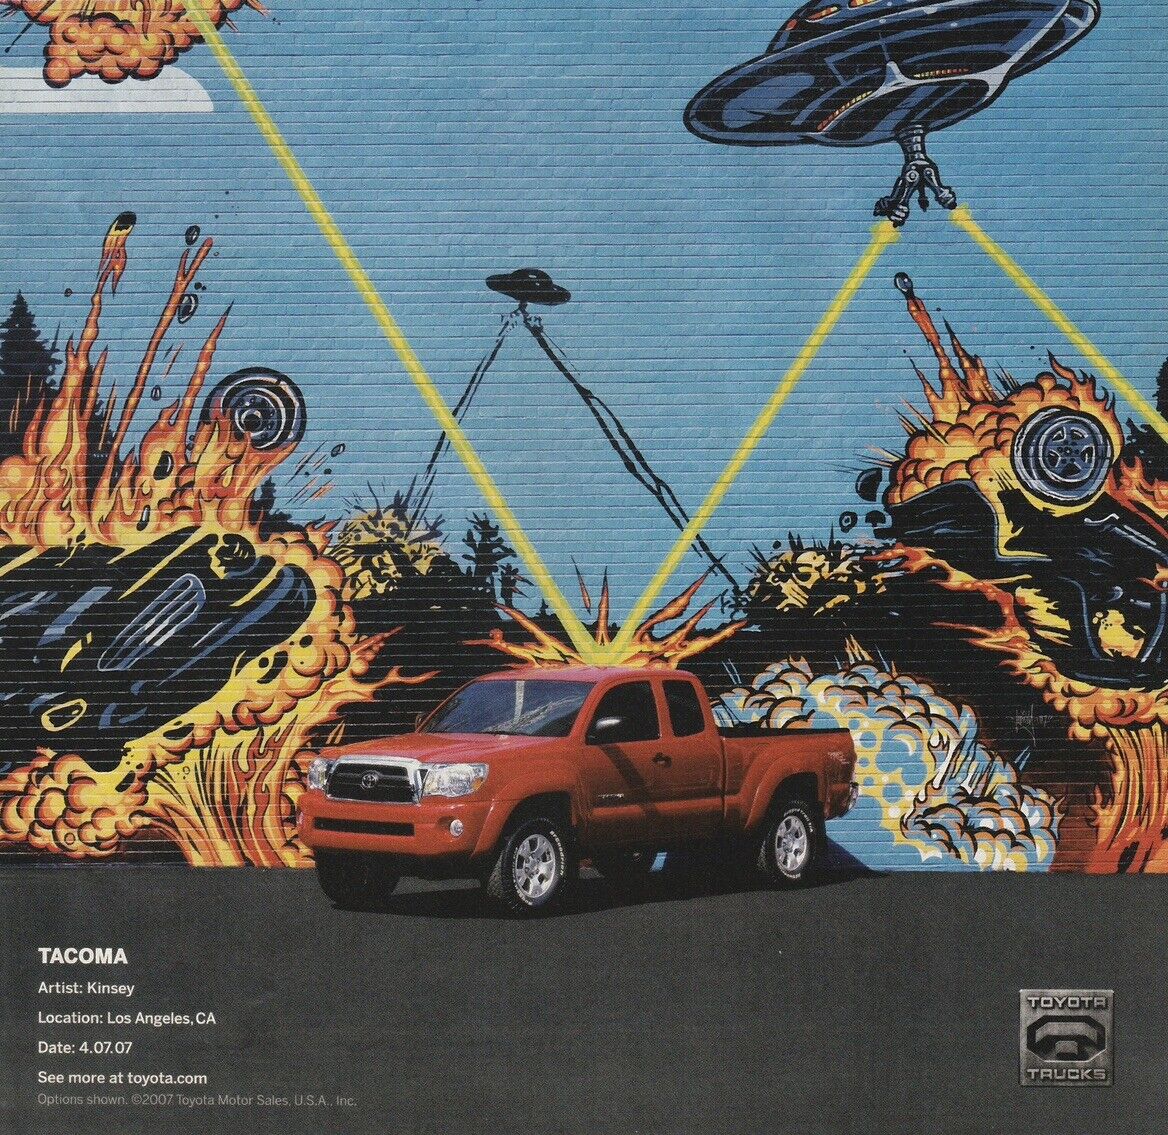 2008 Toyota Tacoma Truck Alien Attack Mural Art Print Ad/Poster 21x27cm EGM 225